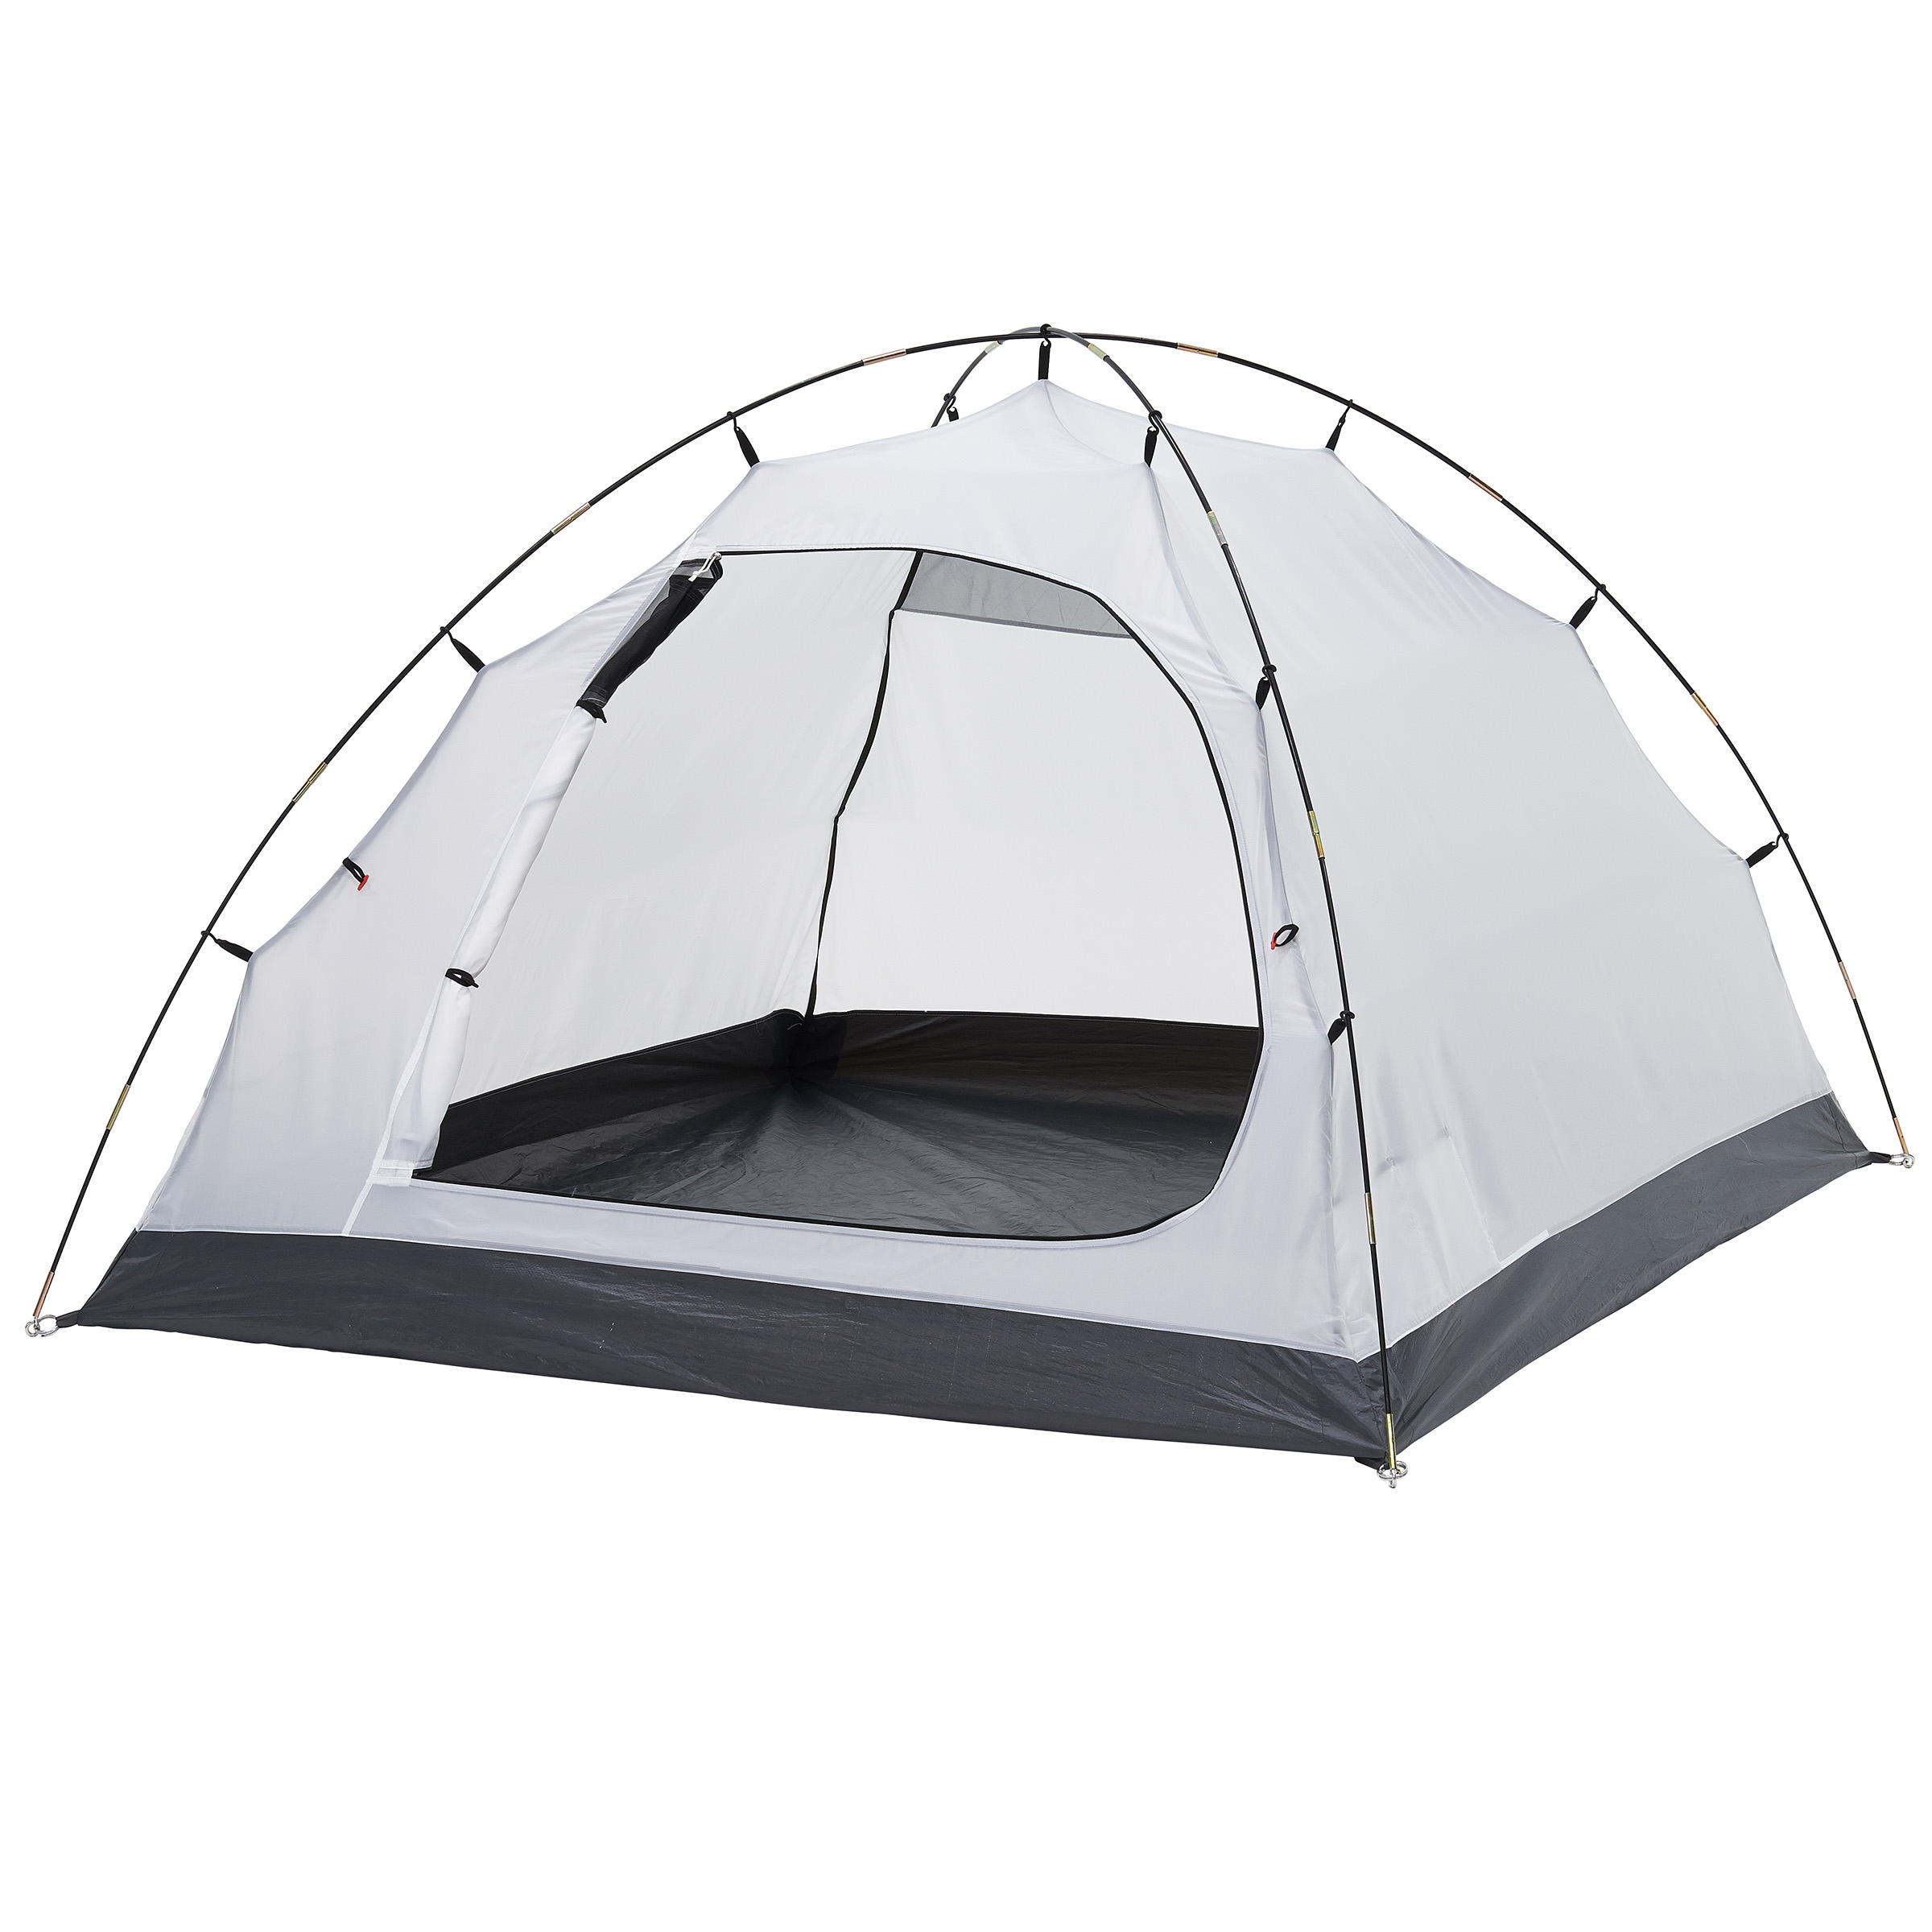 decathlon 3 man tent